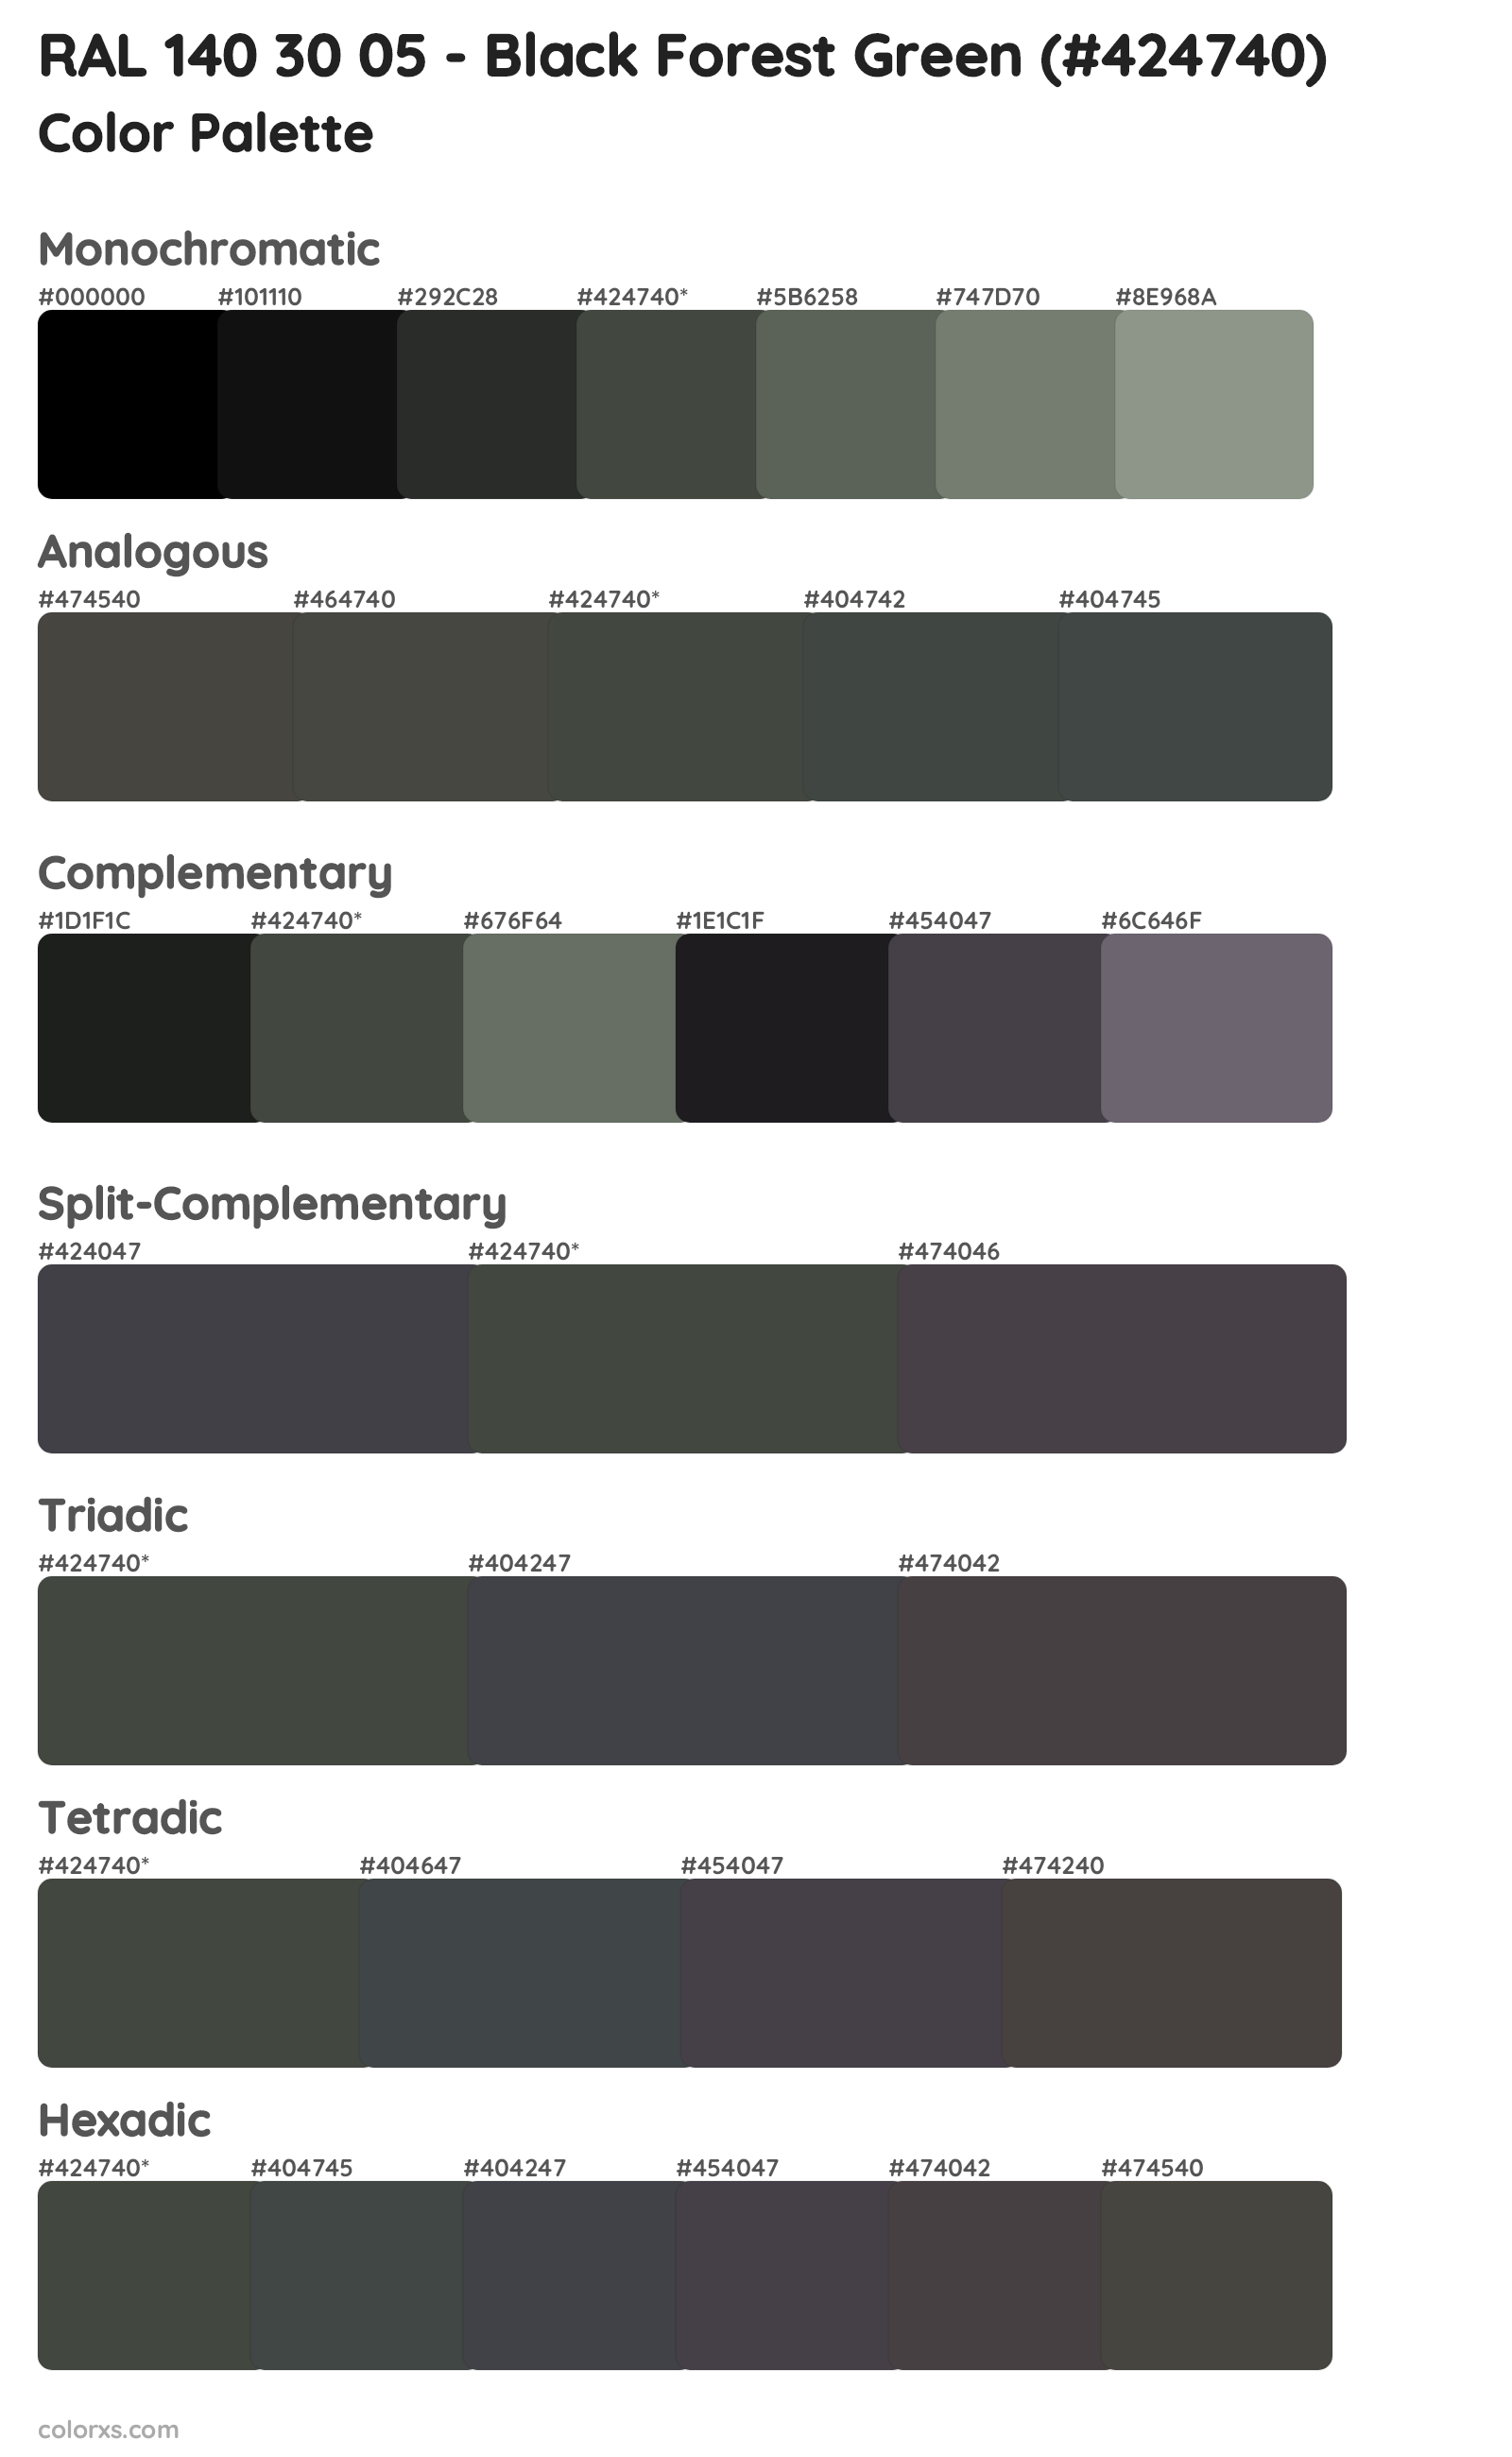 RAL 140 30 05 - Black Forest Green Color Scheme Palettes